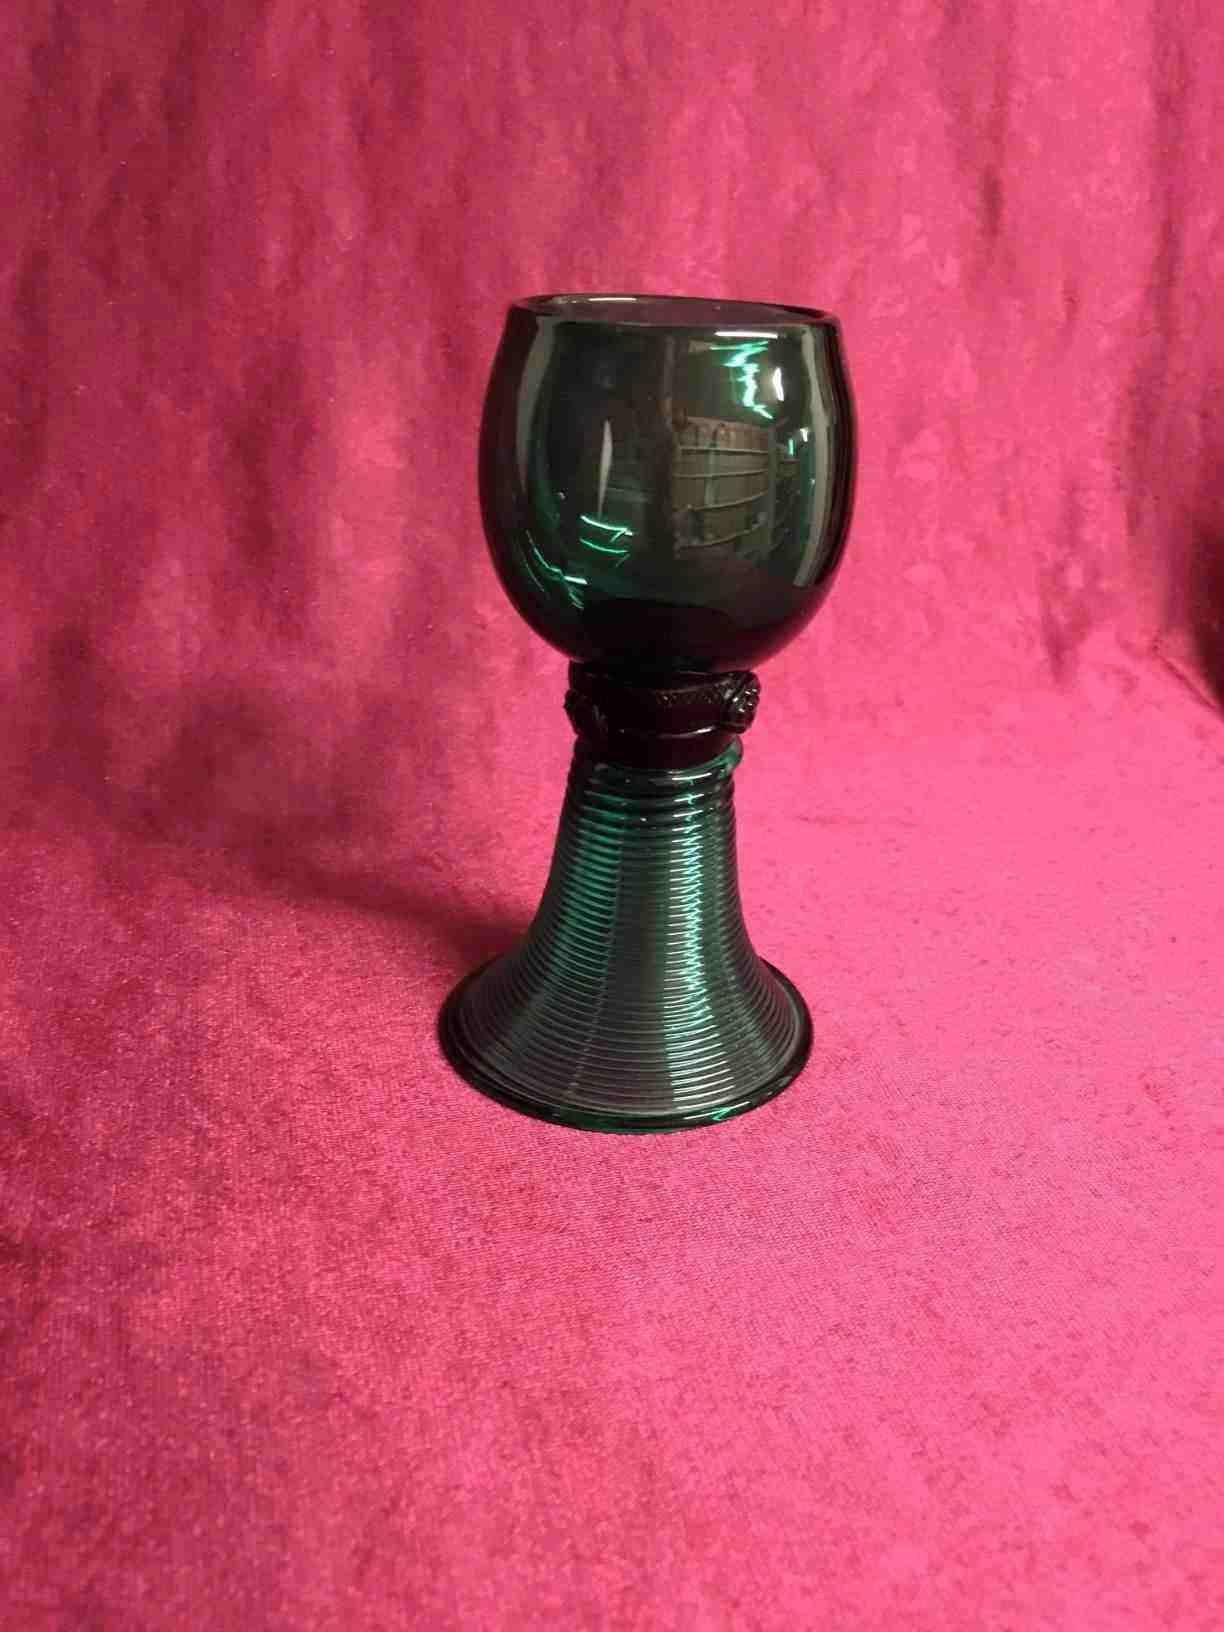 Holmegaard Rhinskviinglas nr. 1 - Römer glas i mørkegrøn krystal, med hul stilk, påsat 3 rosetter fra 1853 i perfekt stand. Pris: 700,- Kr.